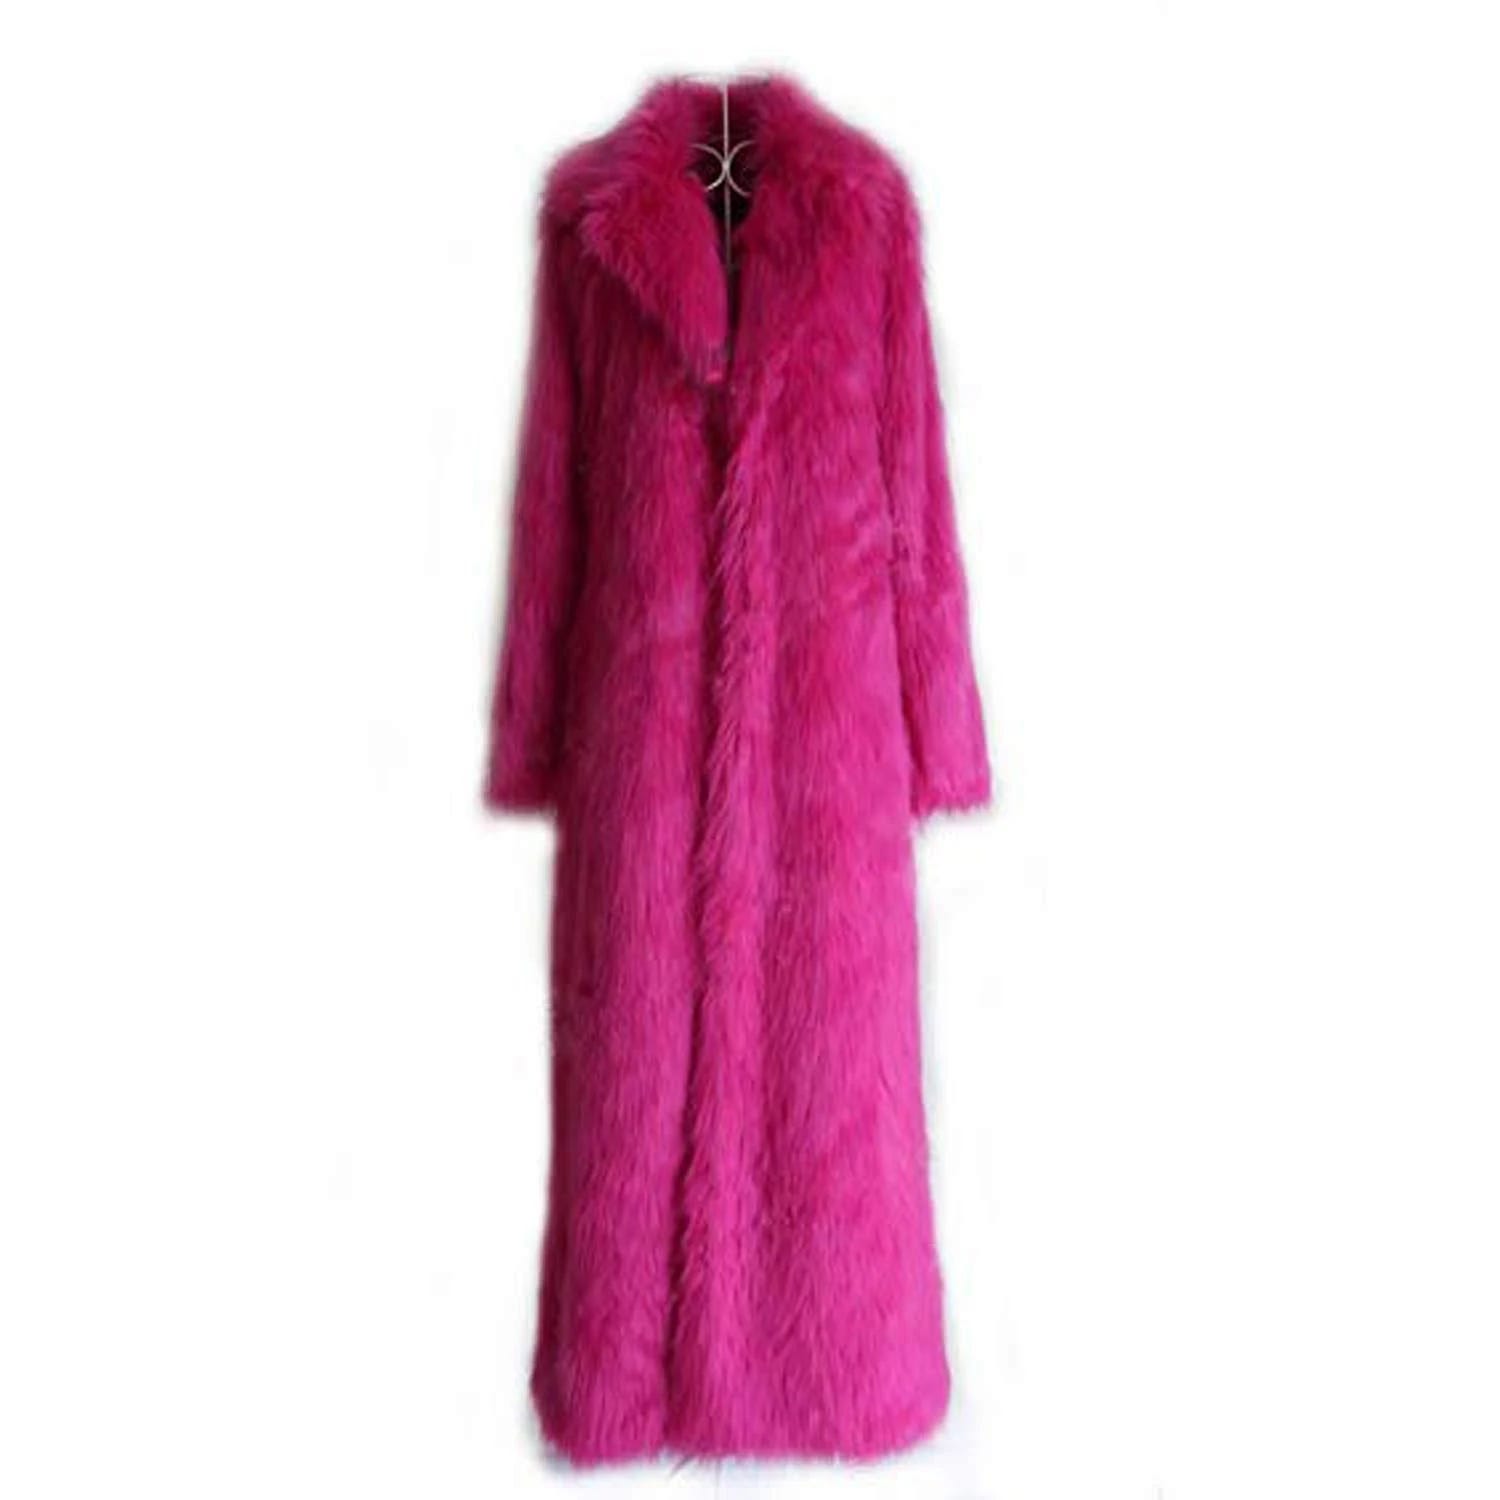 Luxurious Winter Faux Fur Coat: Keep Warm and Stylish | Image